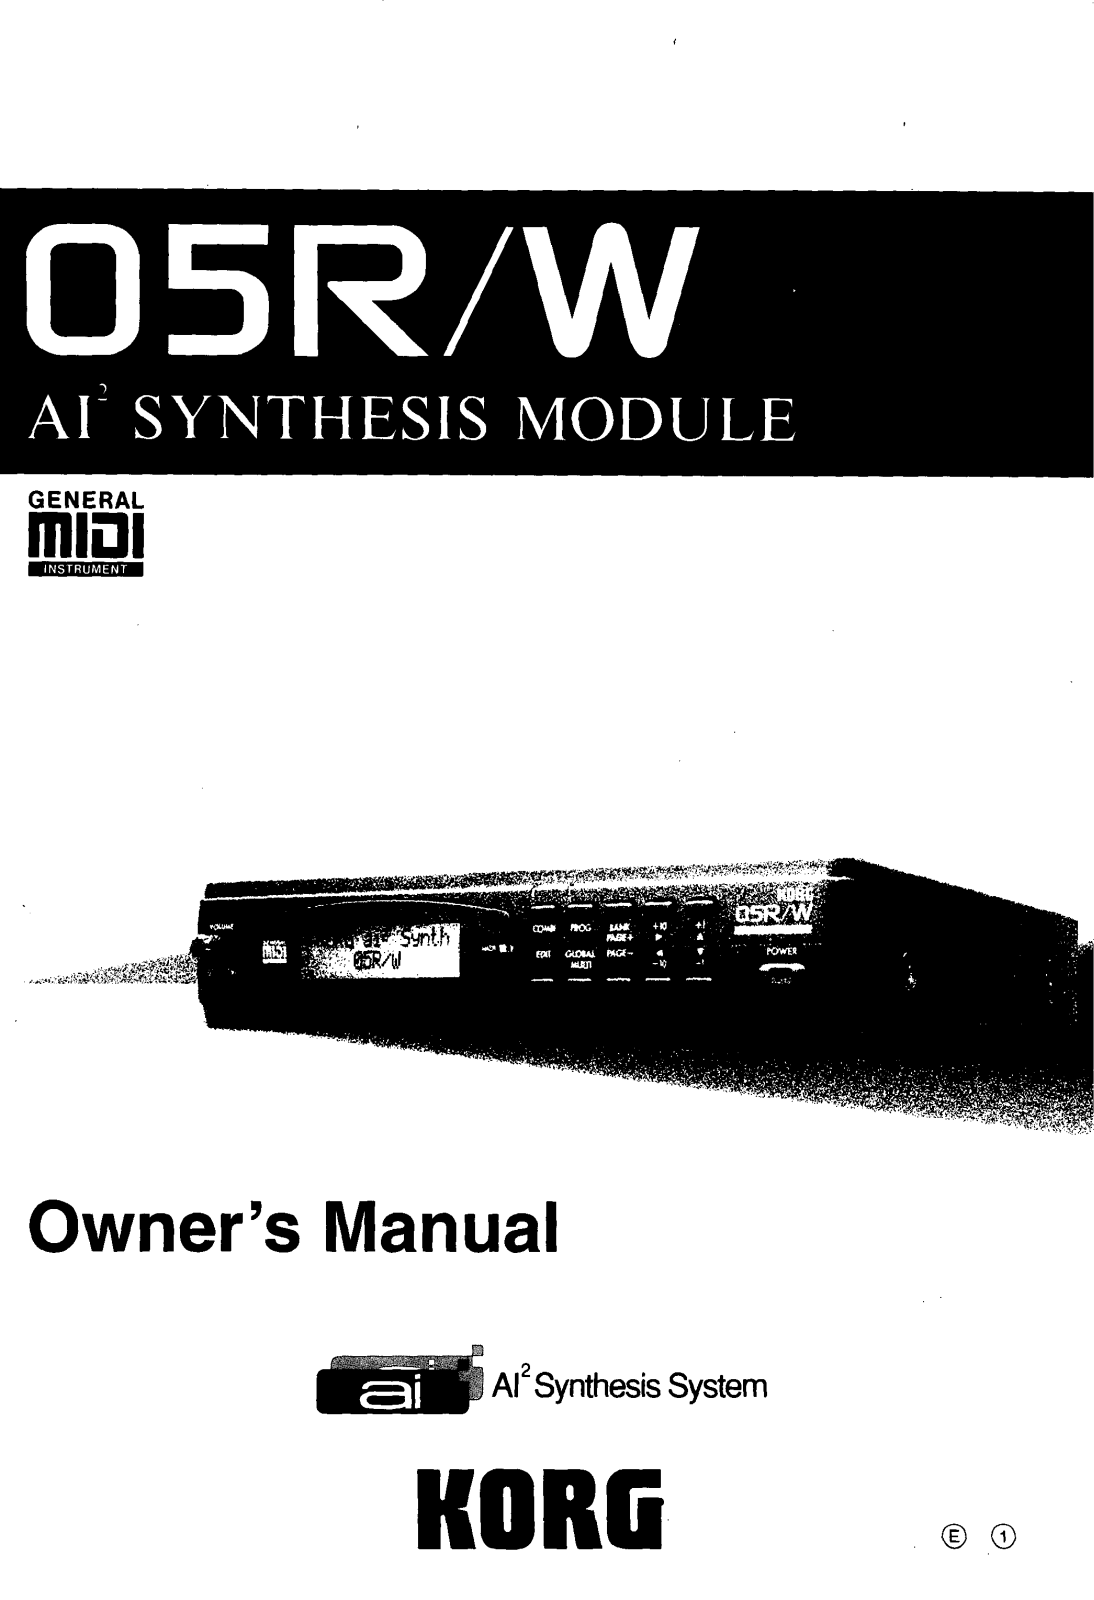 Korg 05R/W User Manual